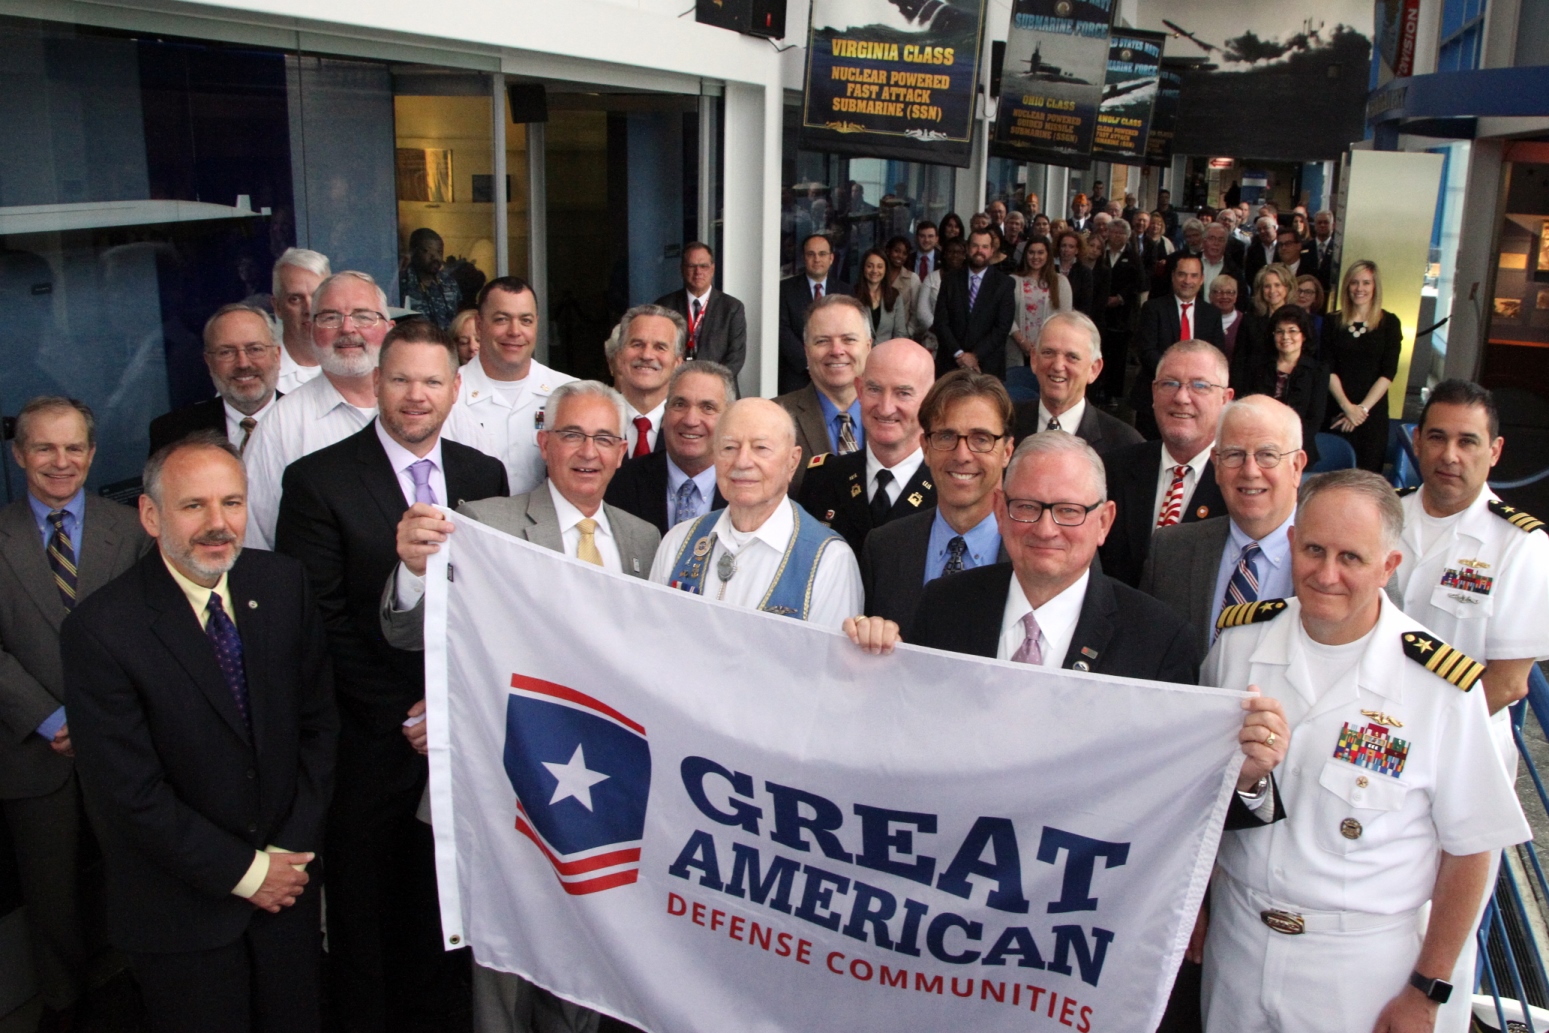 SE CT Honored 'Great American Defense Community'